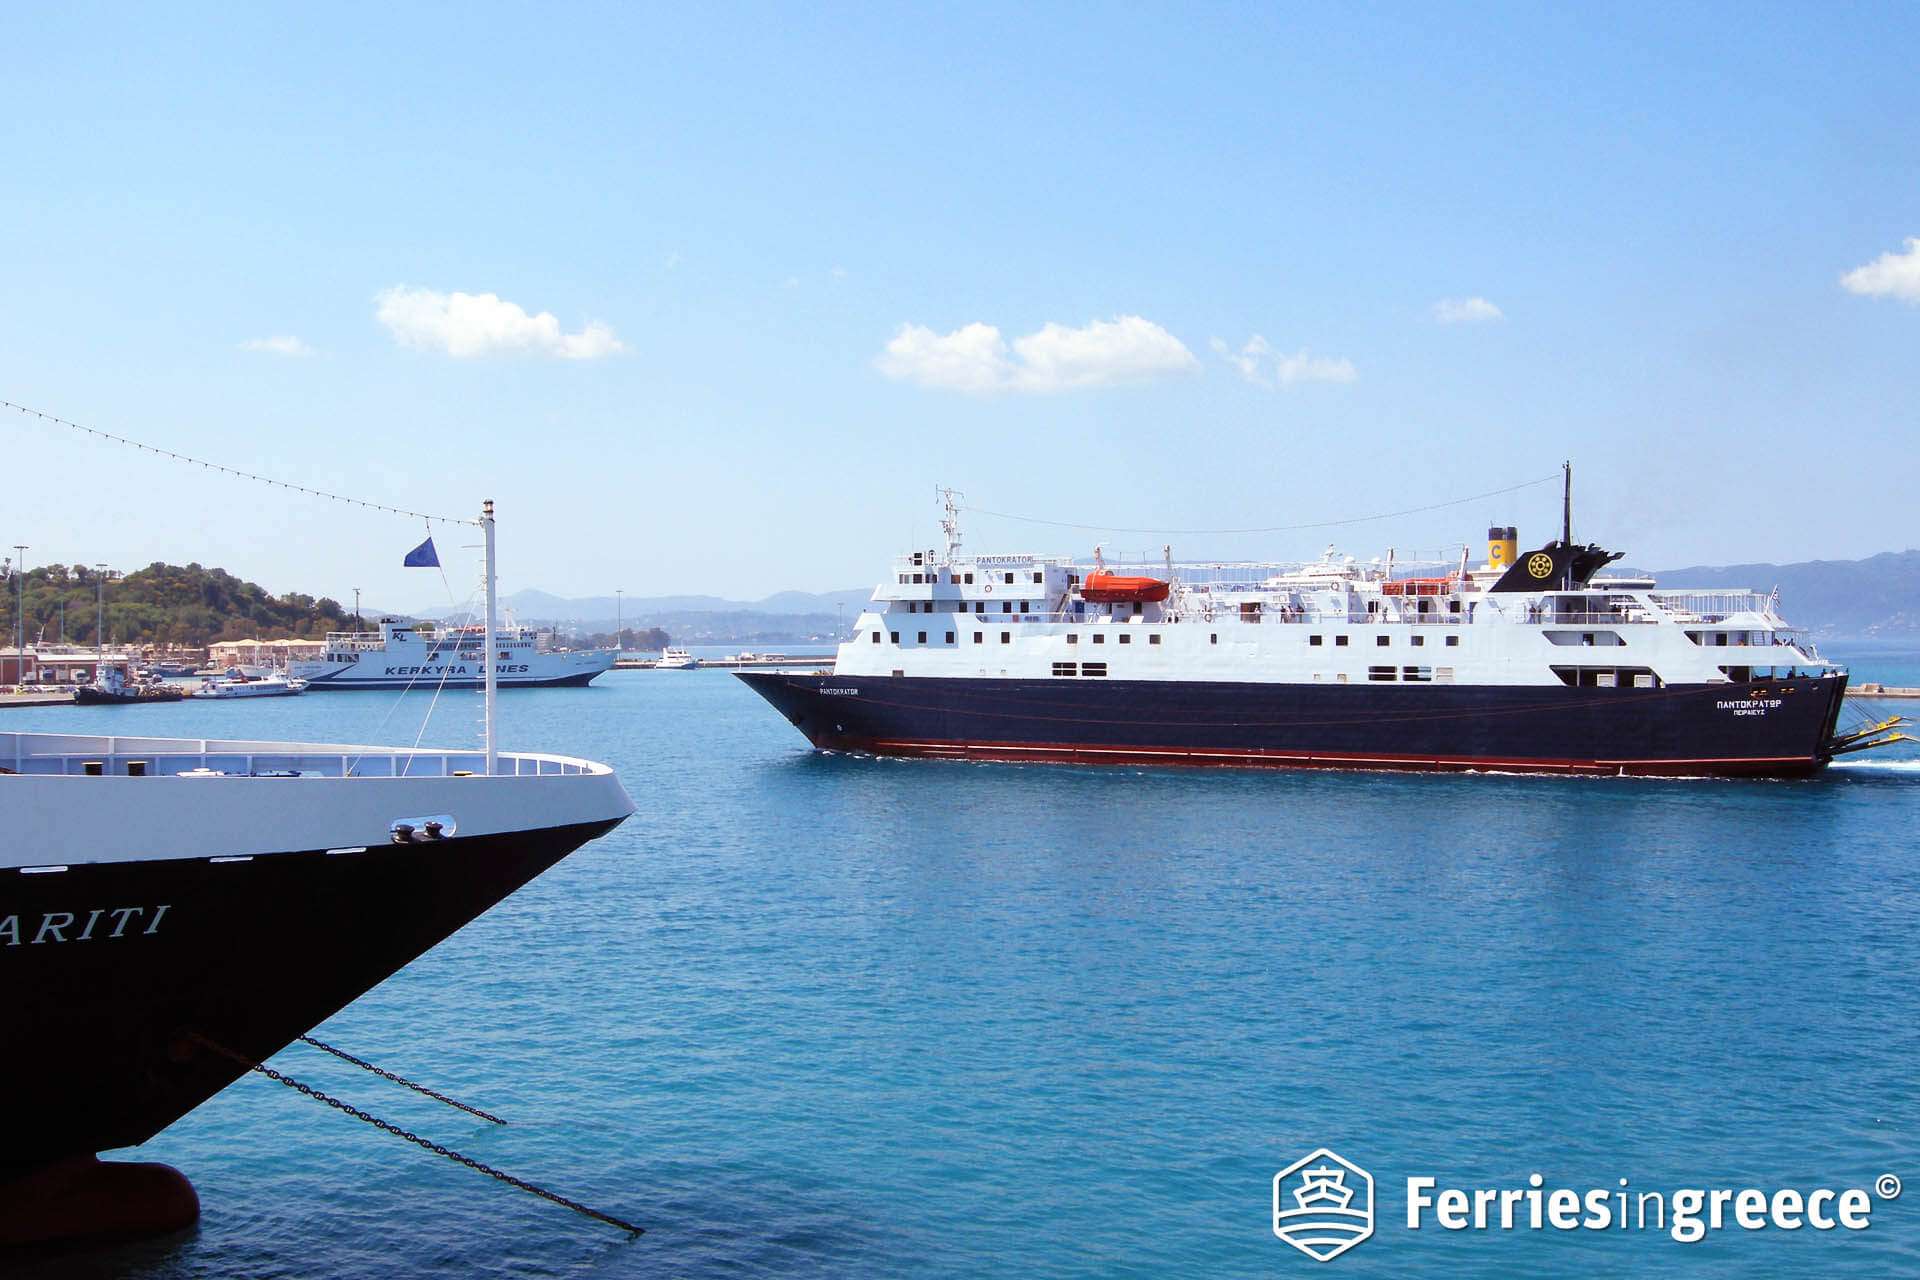 CORFU port in Corfu: Map and photos